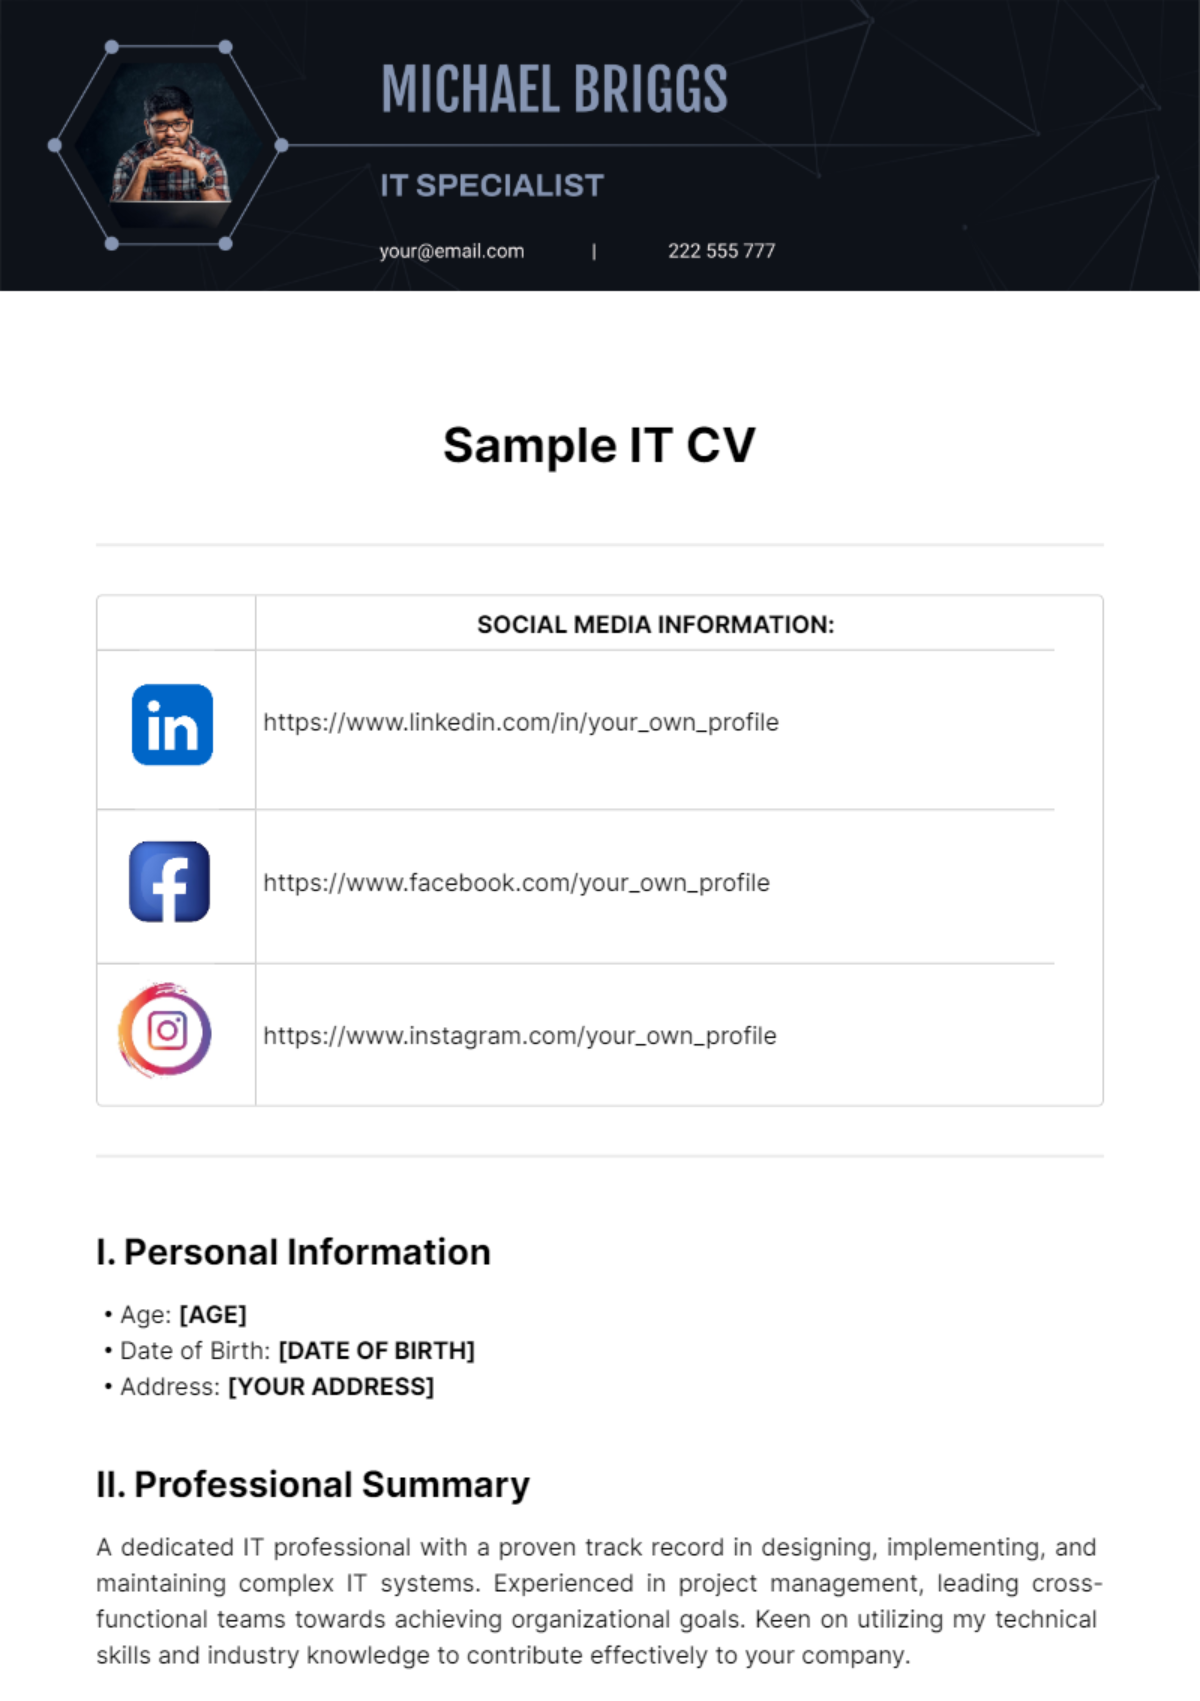 Sample IT CV Template